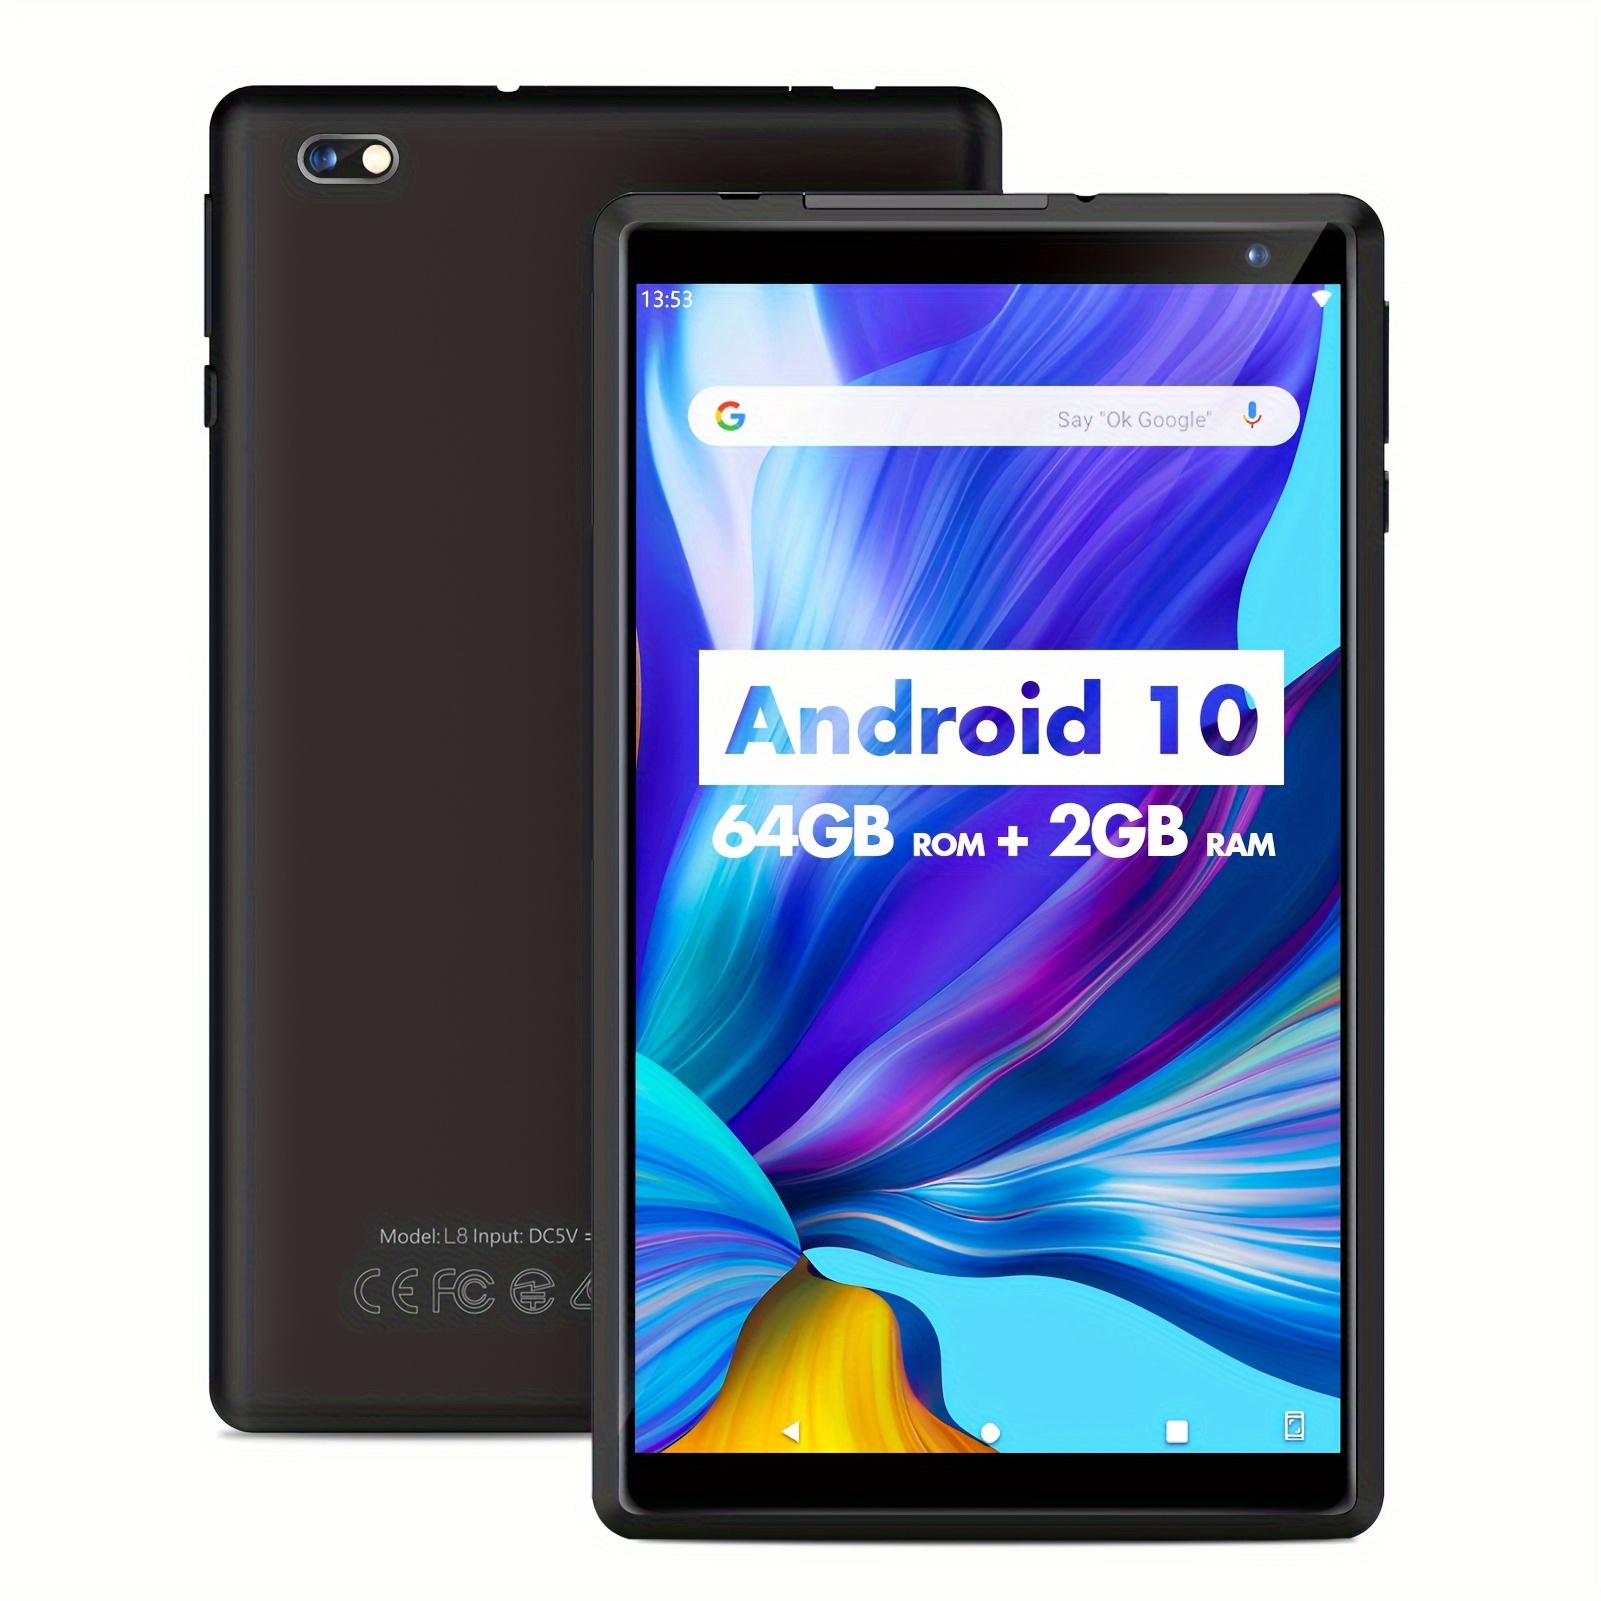 Tableta Android 13 con teclado 2 en 1 de 10 pulgadas, 12 GB de RAM, 128 GB  ROM 1 TB Expand, Quad-Core 2.0GHz CPU Tablet PC, 5G WiFi 6 BT 5.0, cámara